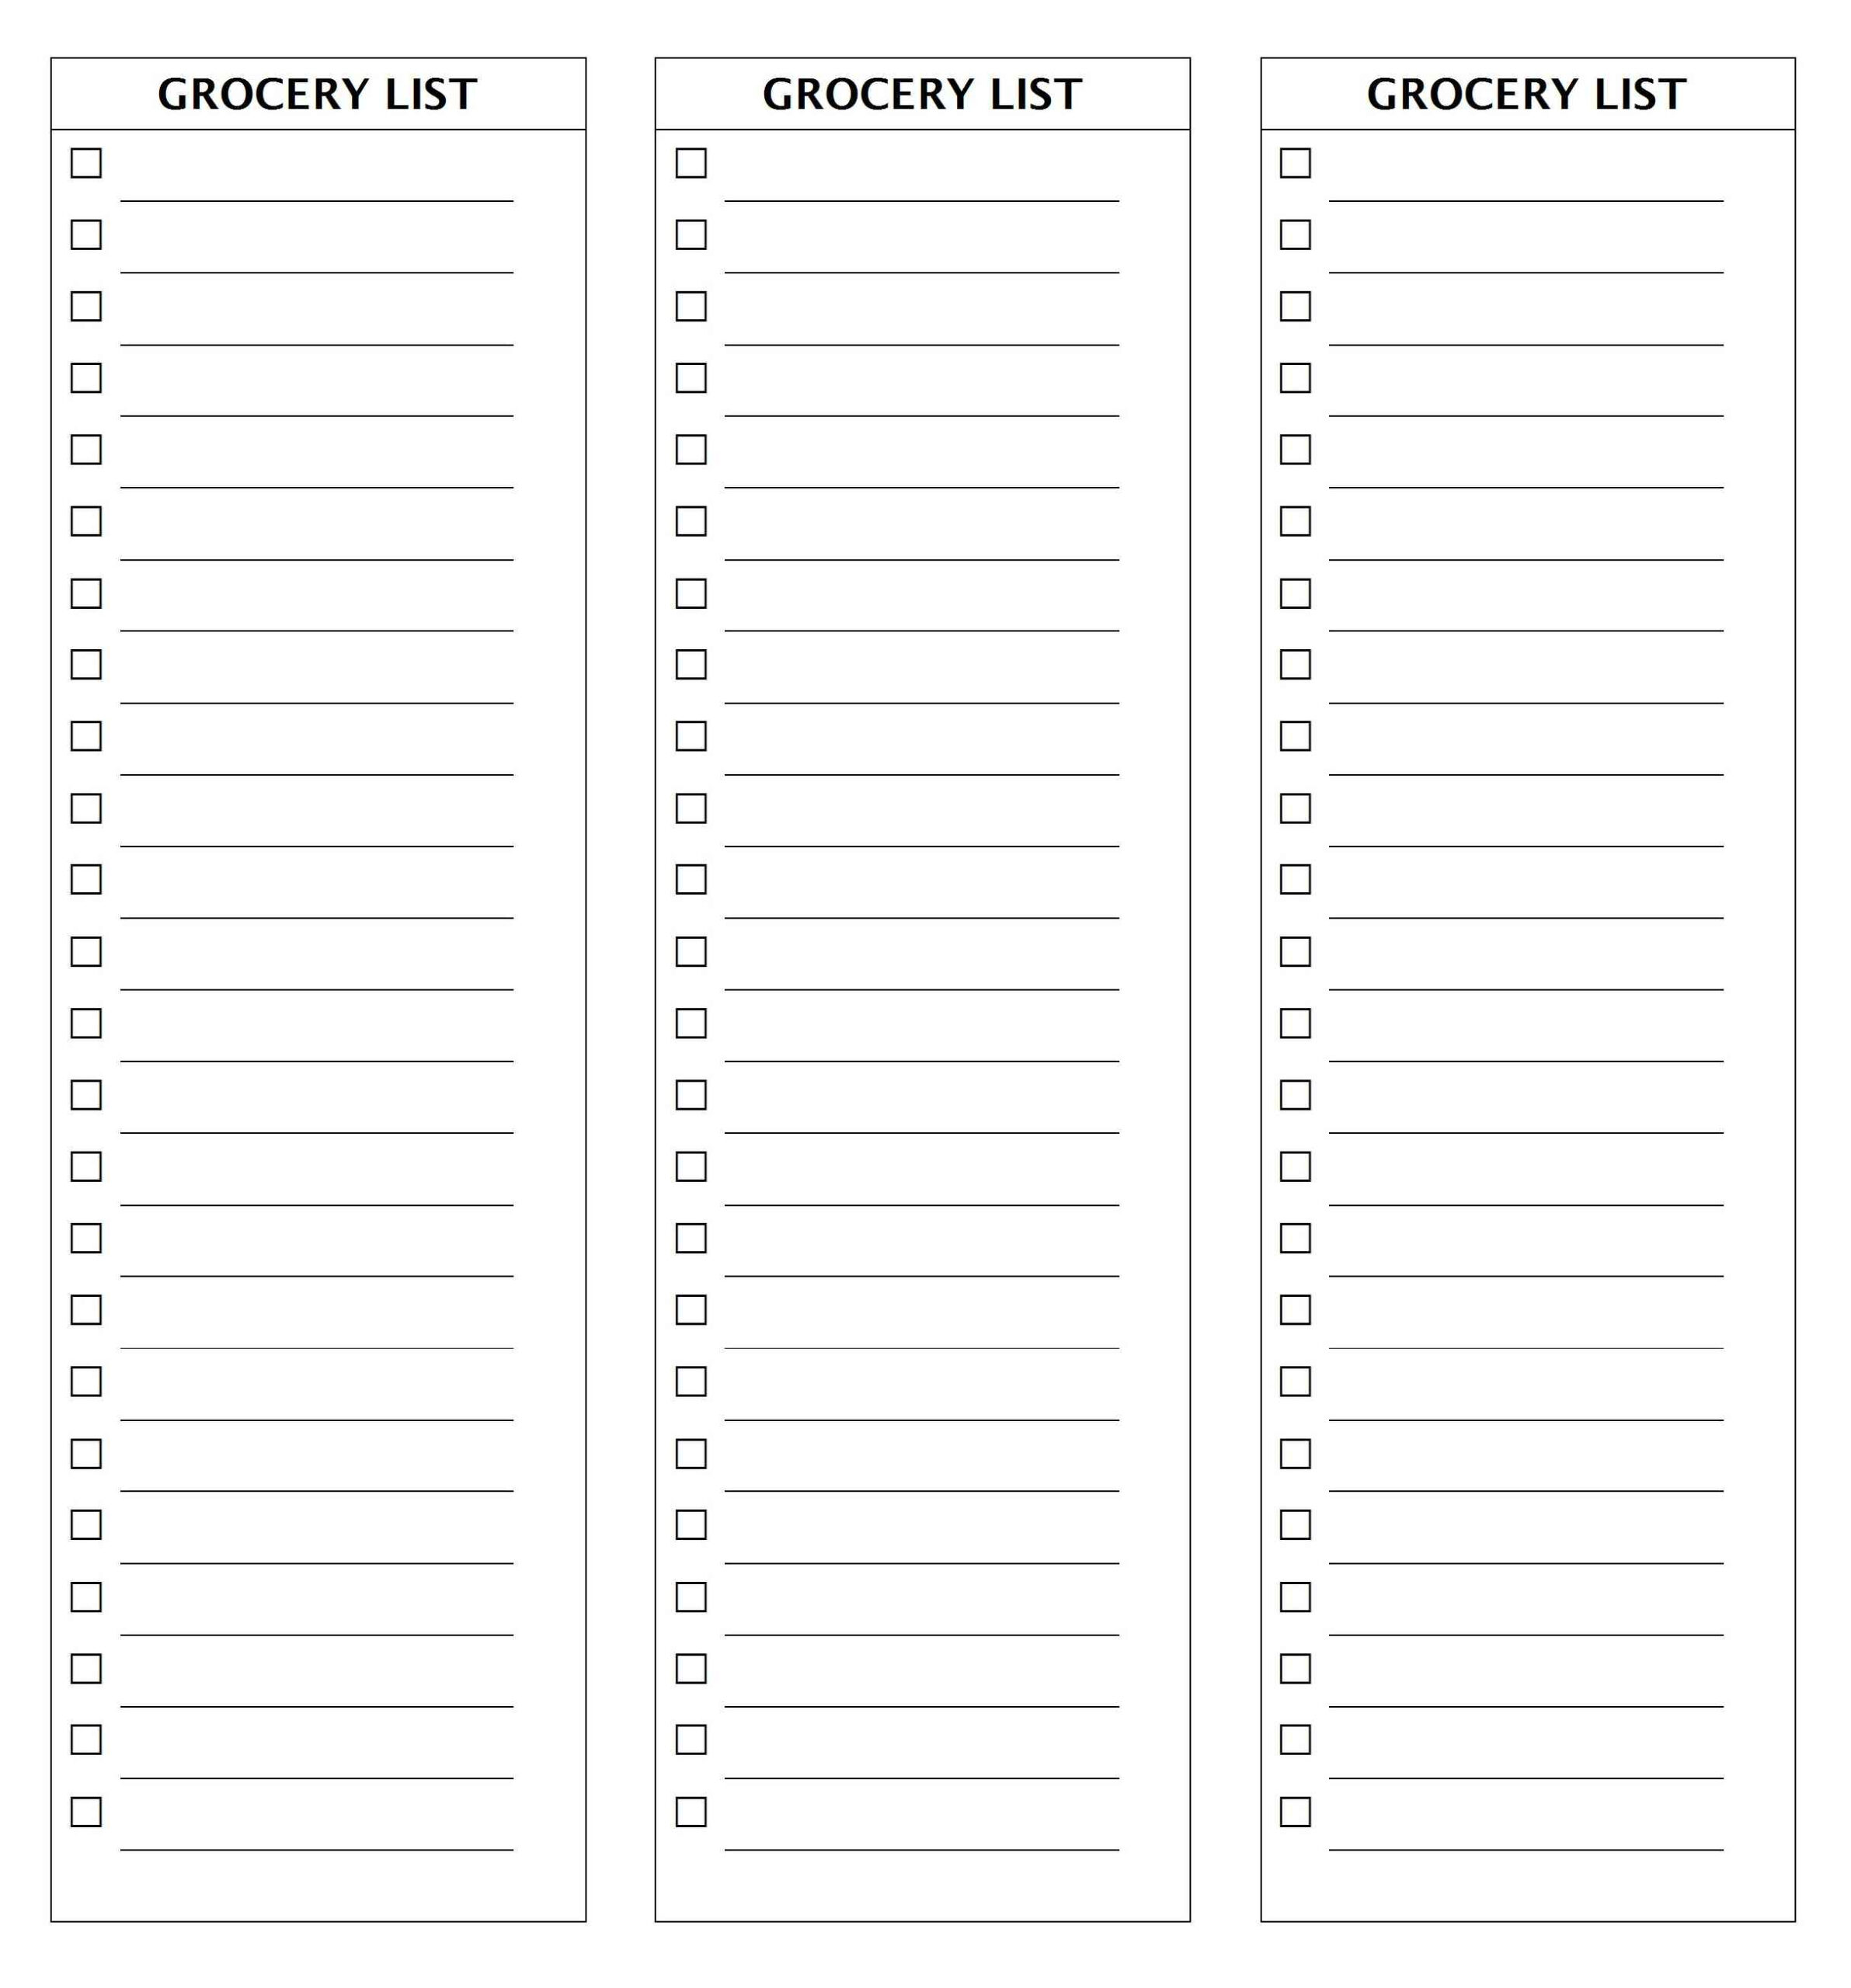 Blank Checklist Template Word 2010 | Sample Customer Service With Blank Checklist Template Word